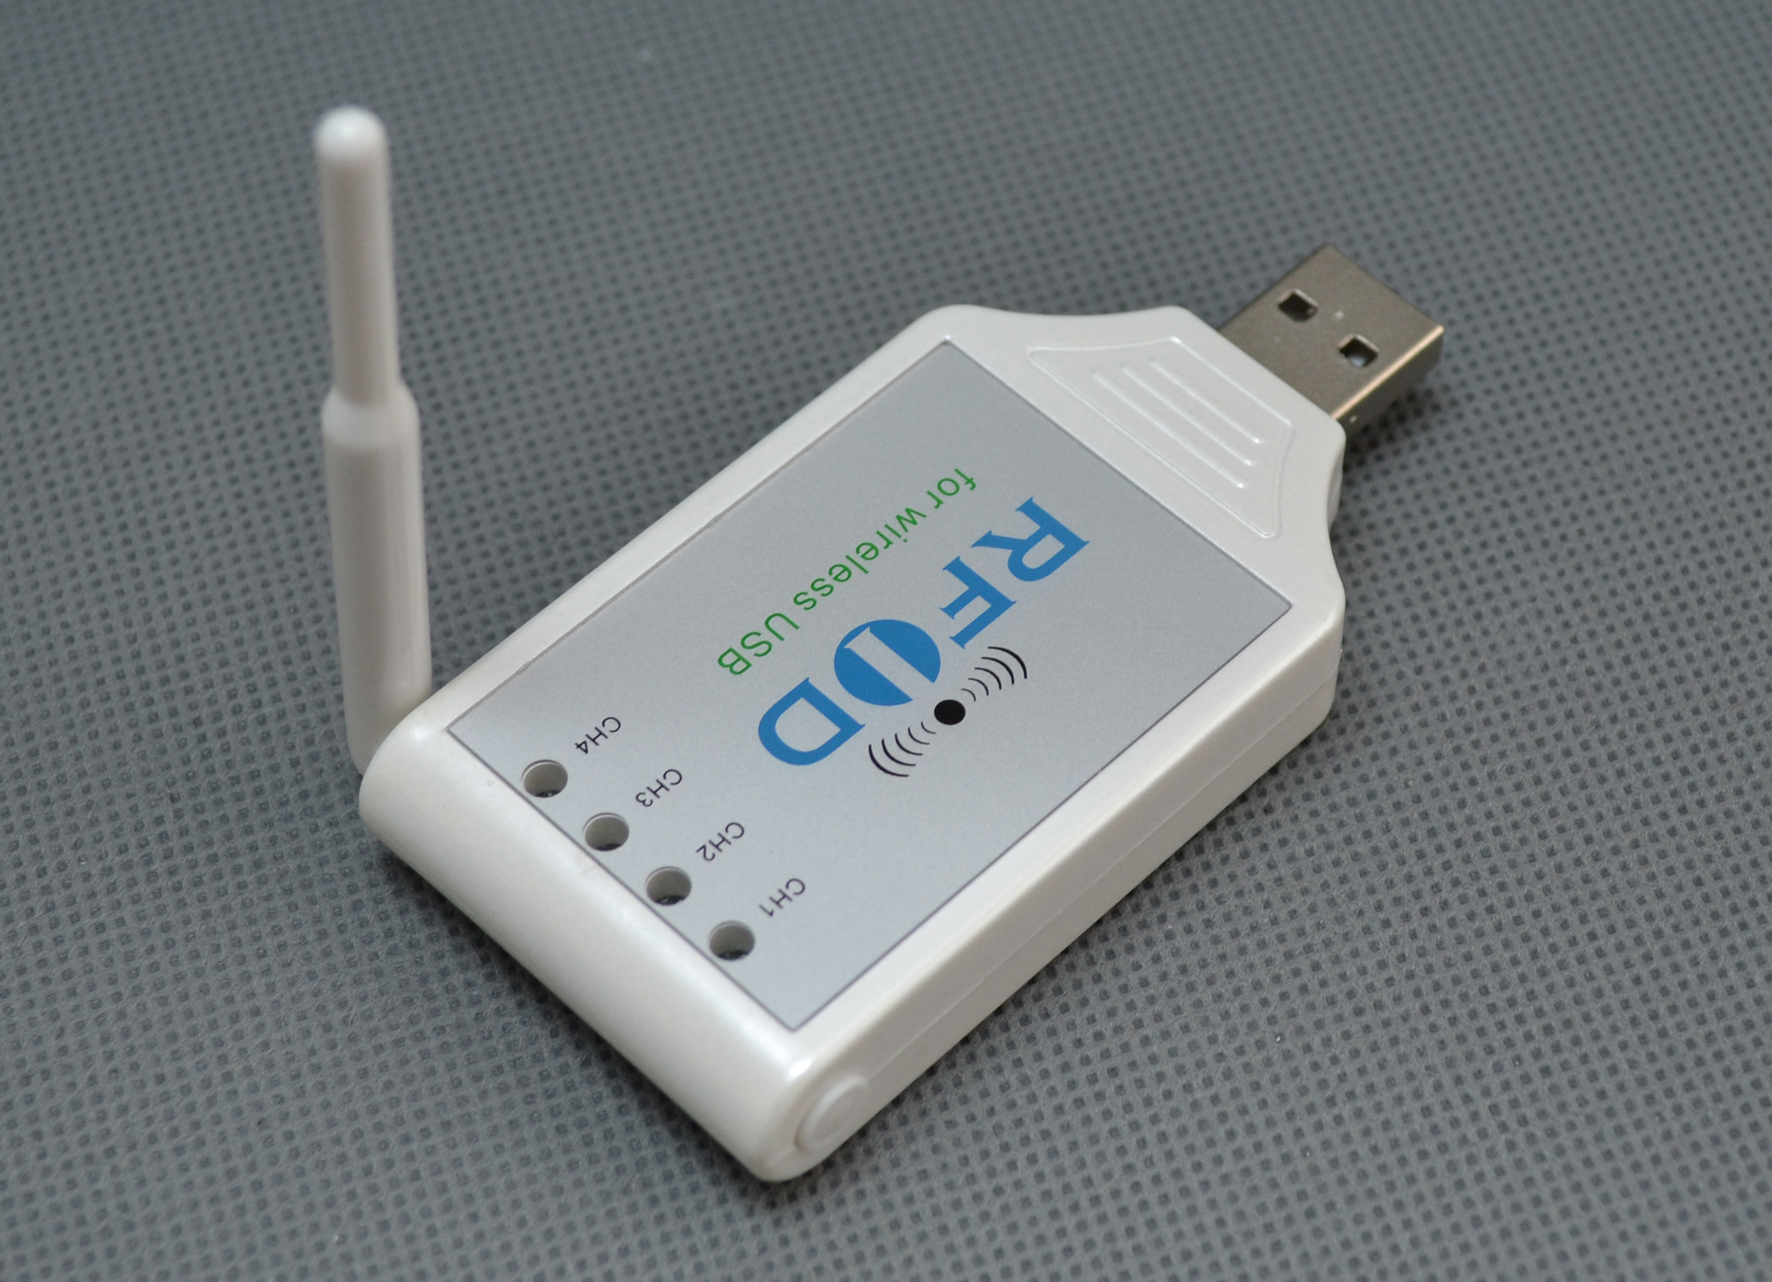 Wireless USB Dental Camera for Computer